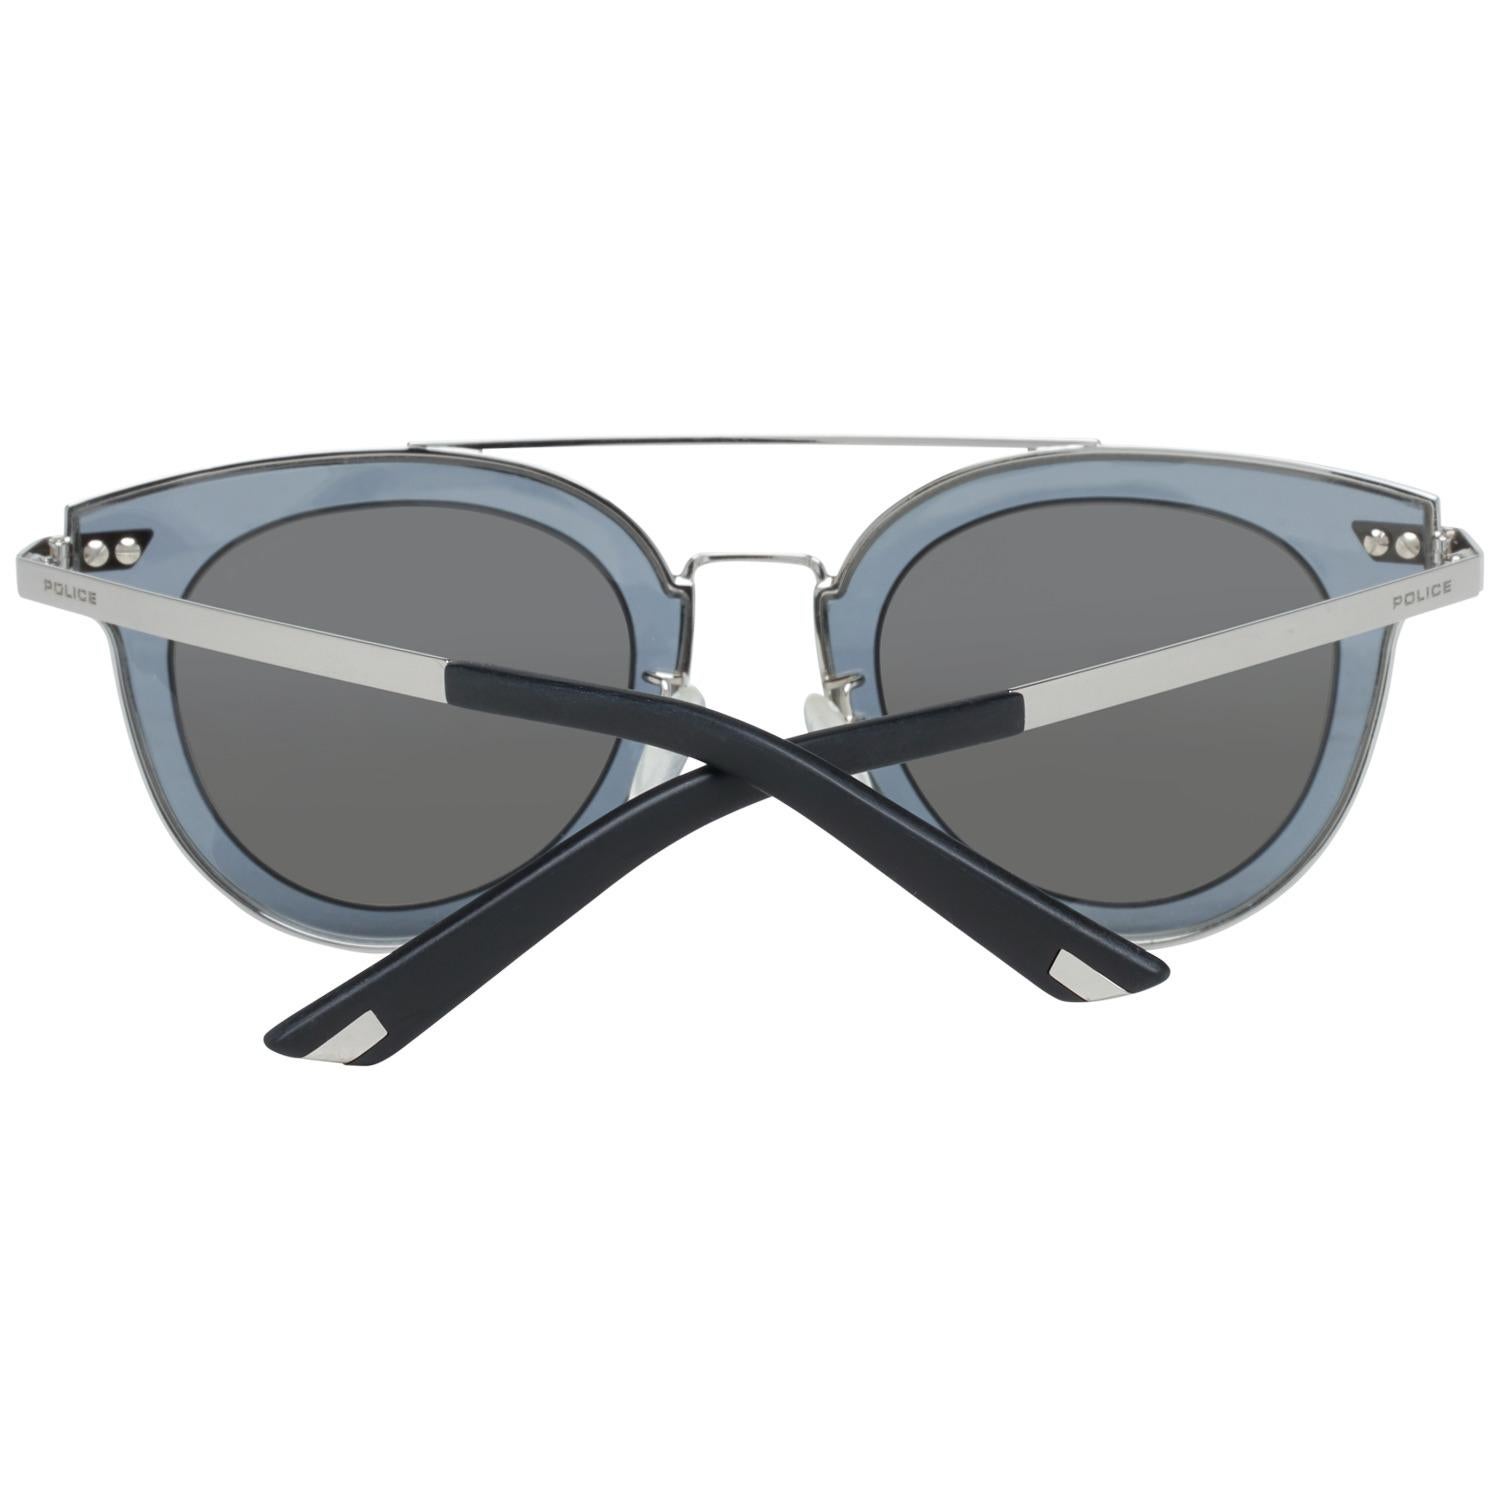 Police Mint Unisex Silver Sunglasses SPL349 47579K 47-24-145 mm 2